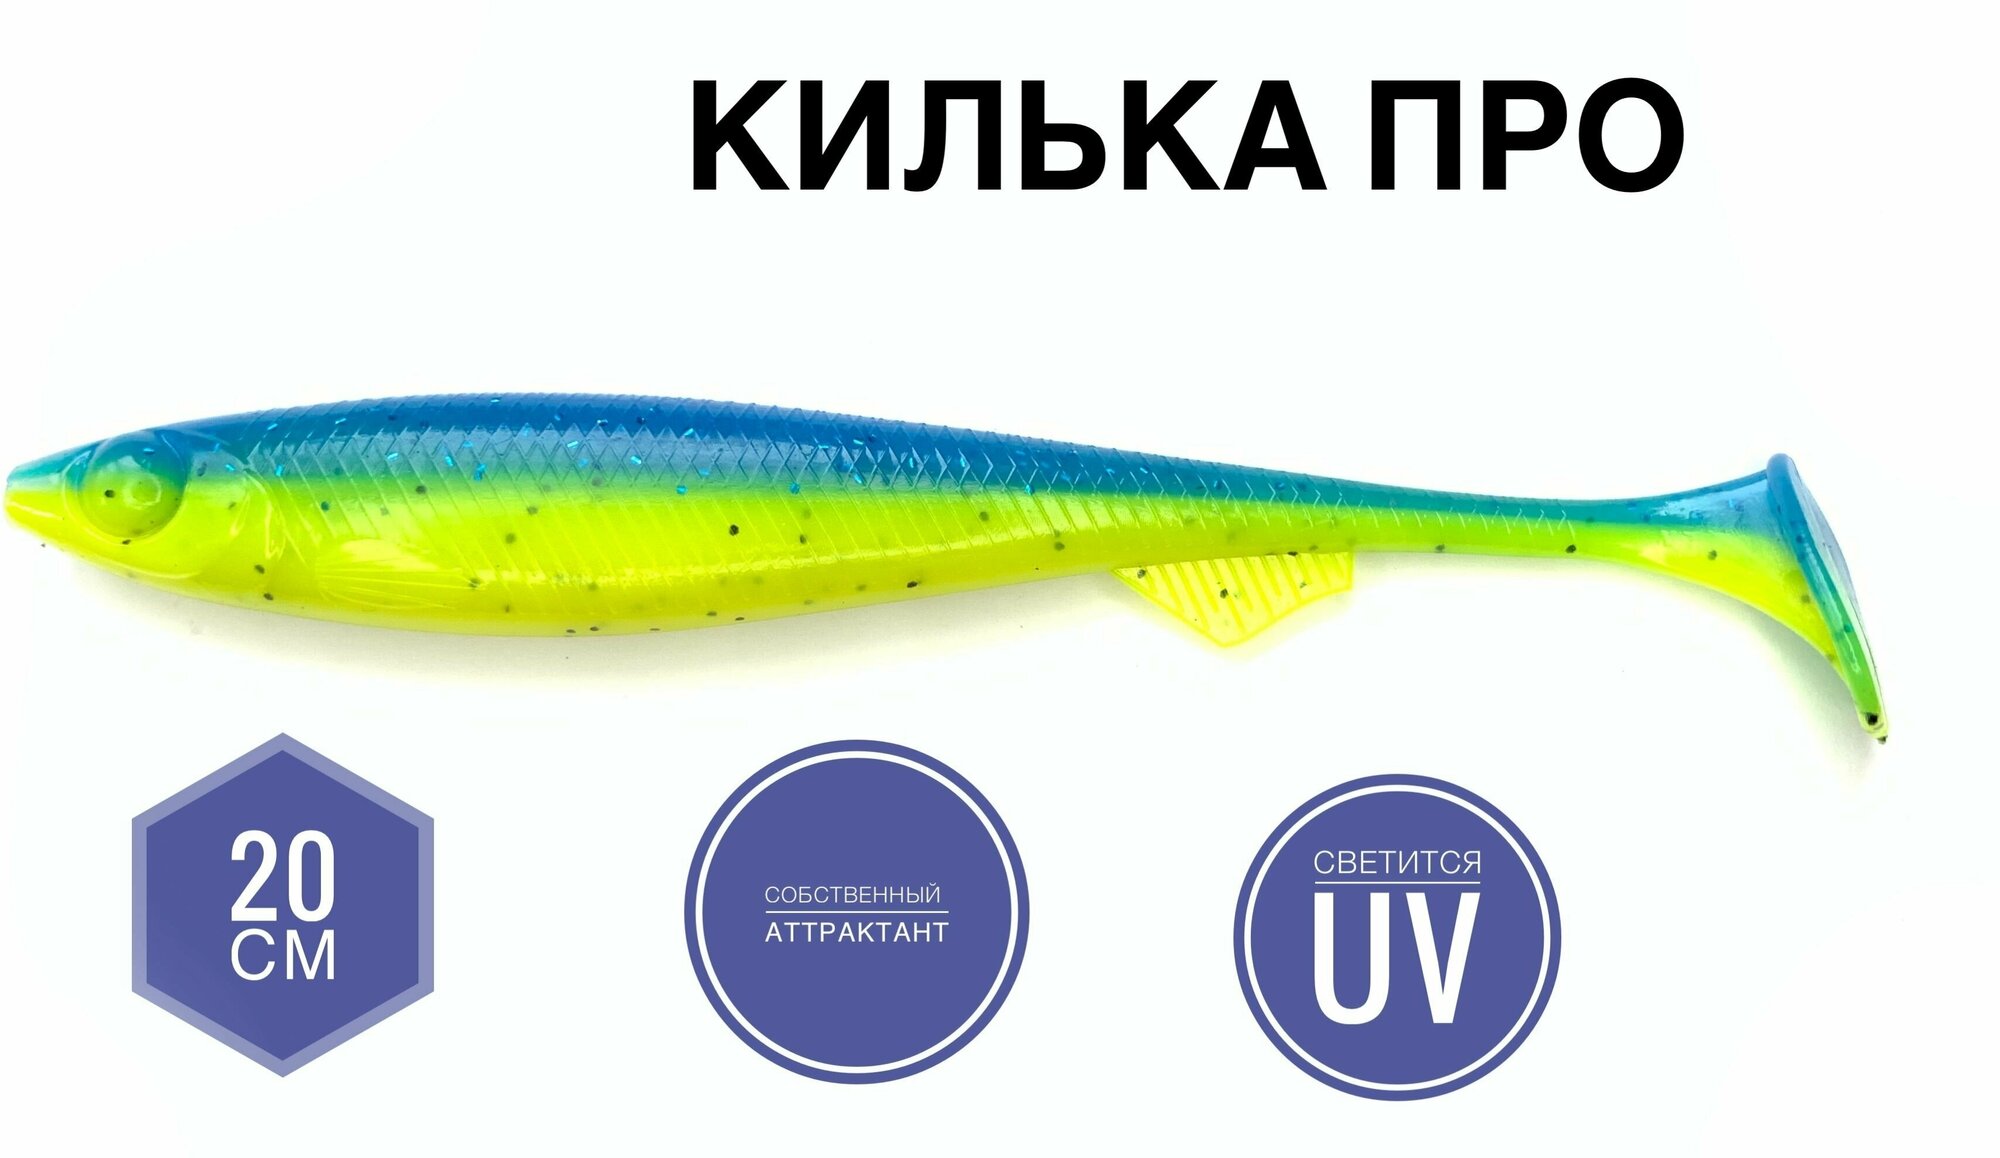 Крупная силиконовая приманка для рыбалки Килька Про 20 см (свимбейт/ джеркбейт), Голубой-Шартрез/ Blue mint/ pal03/ Ice Chartreuse, 1 шт.